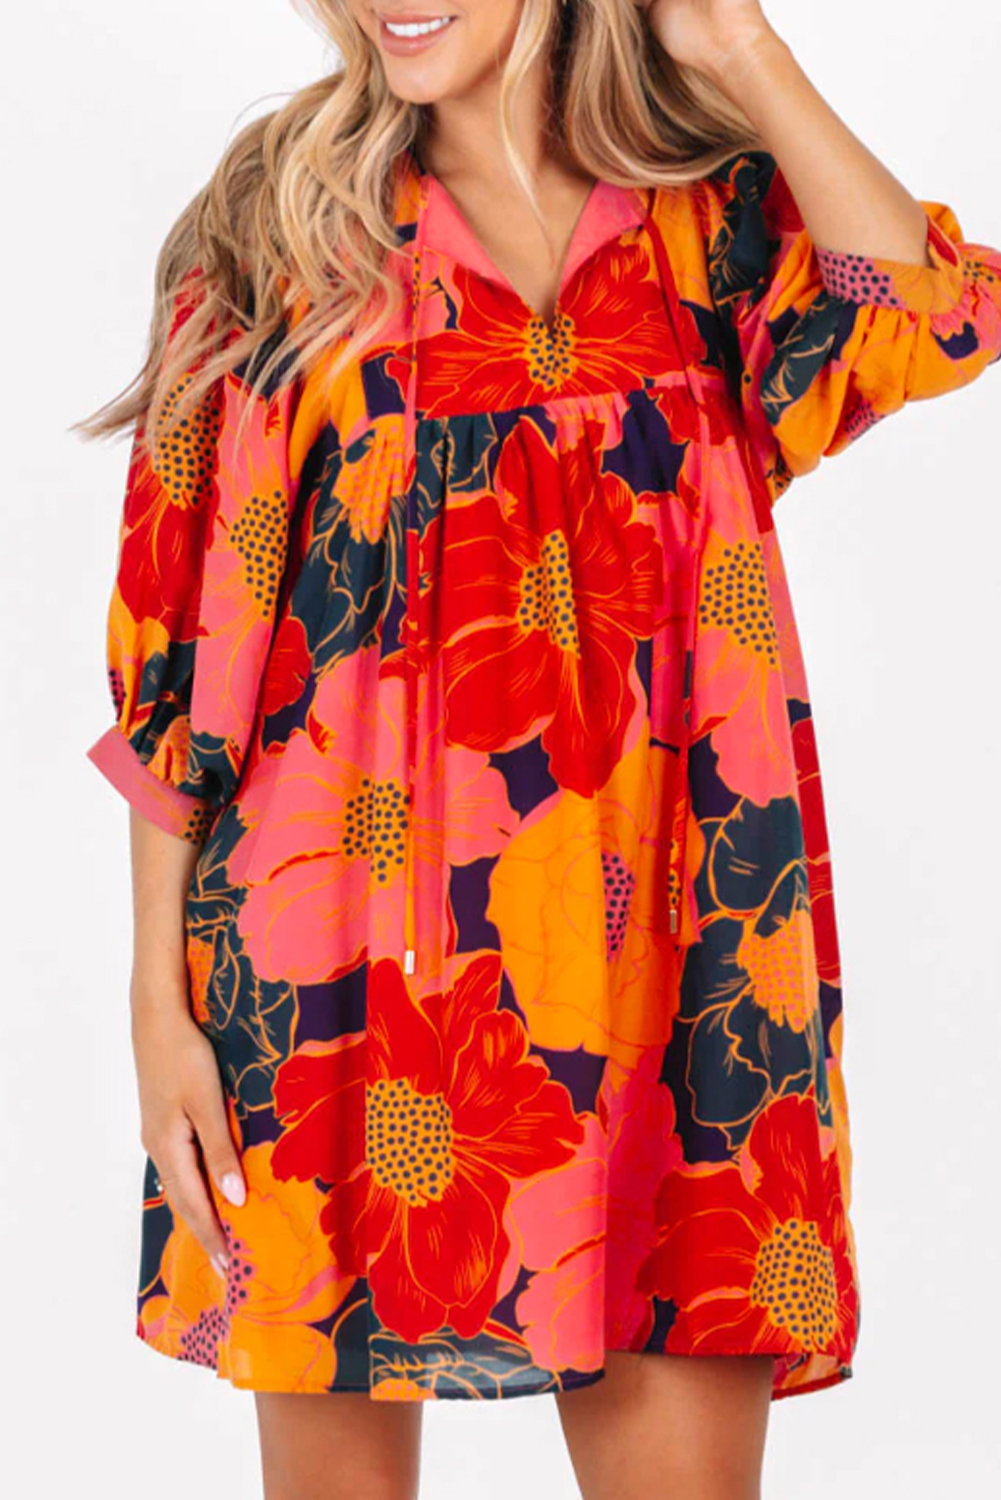 Shewin Wholesale High Quality Orange Boho Floral Print TIE Neck Mini Dress